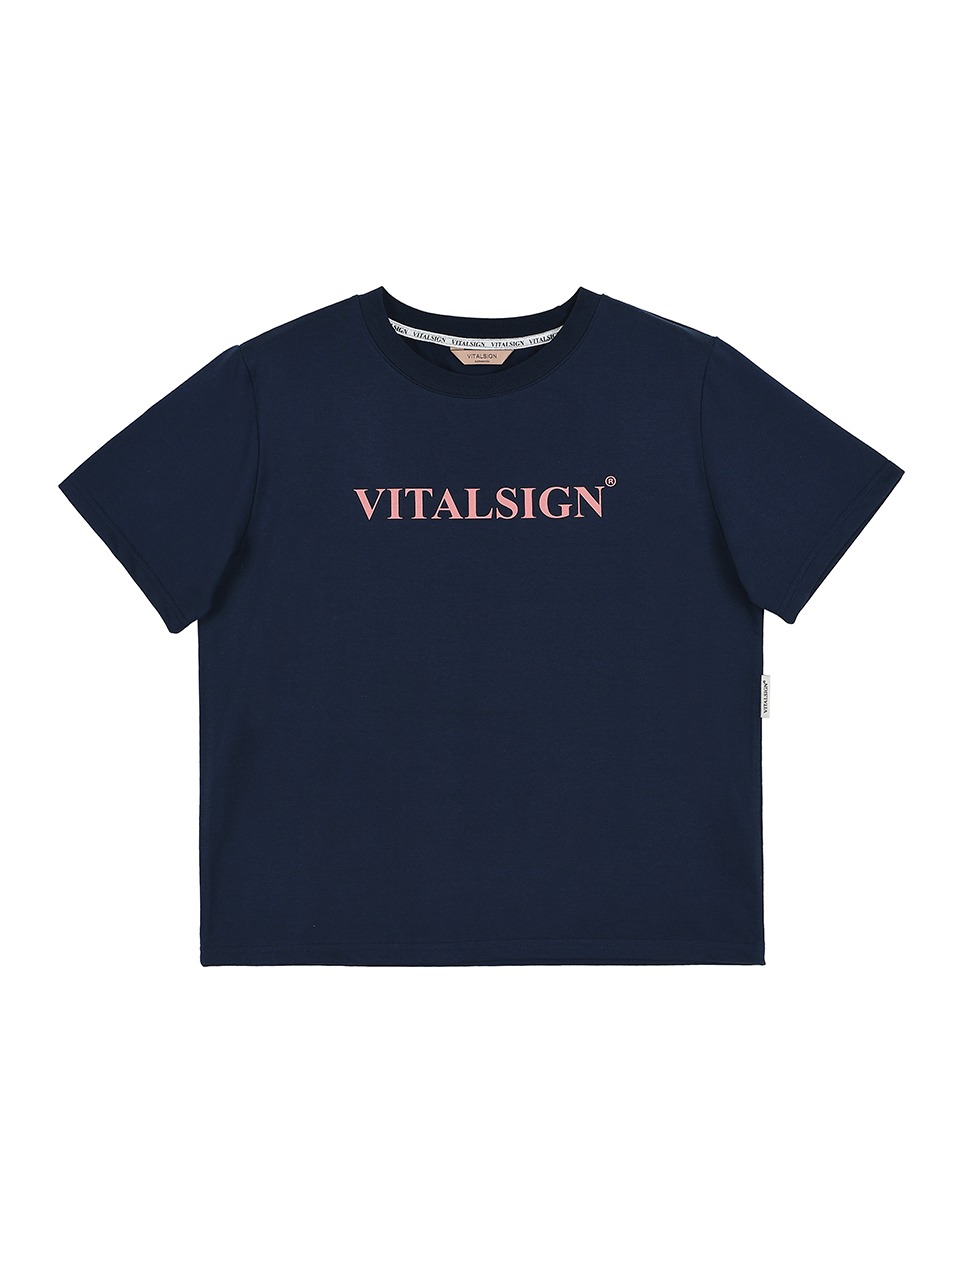 Vitalsign Signature T-shirt (Navy)